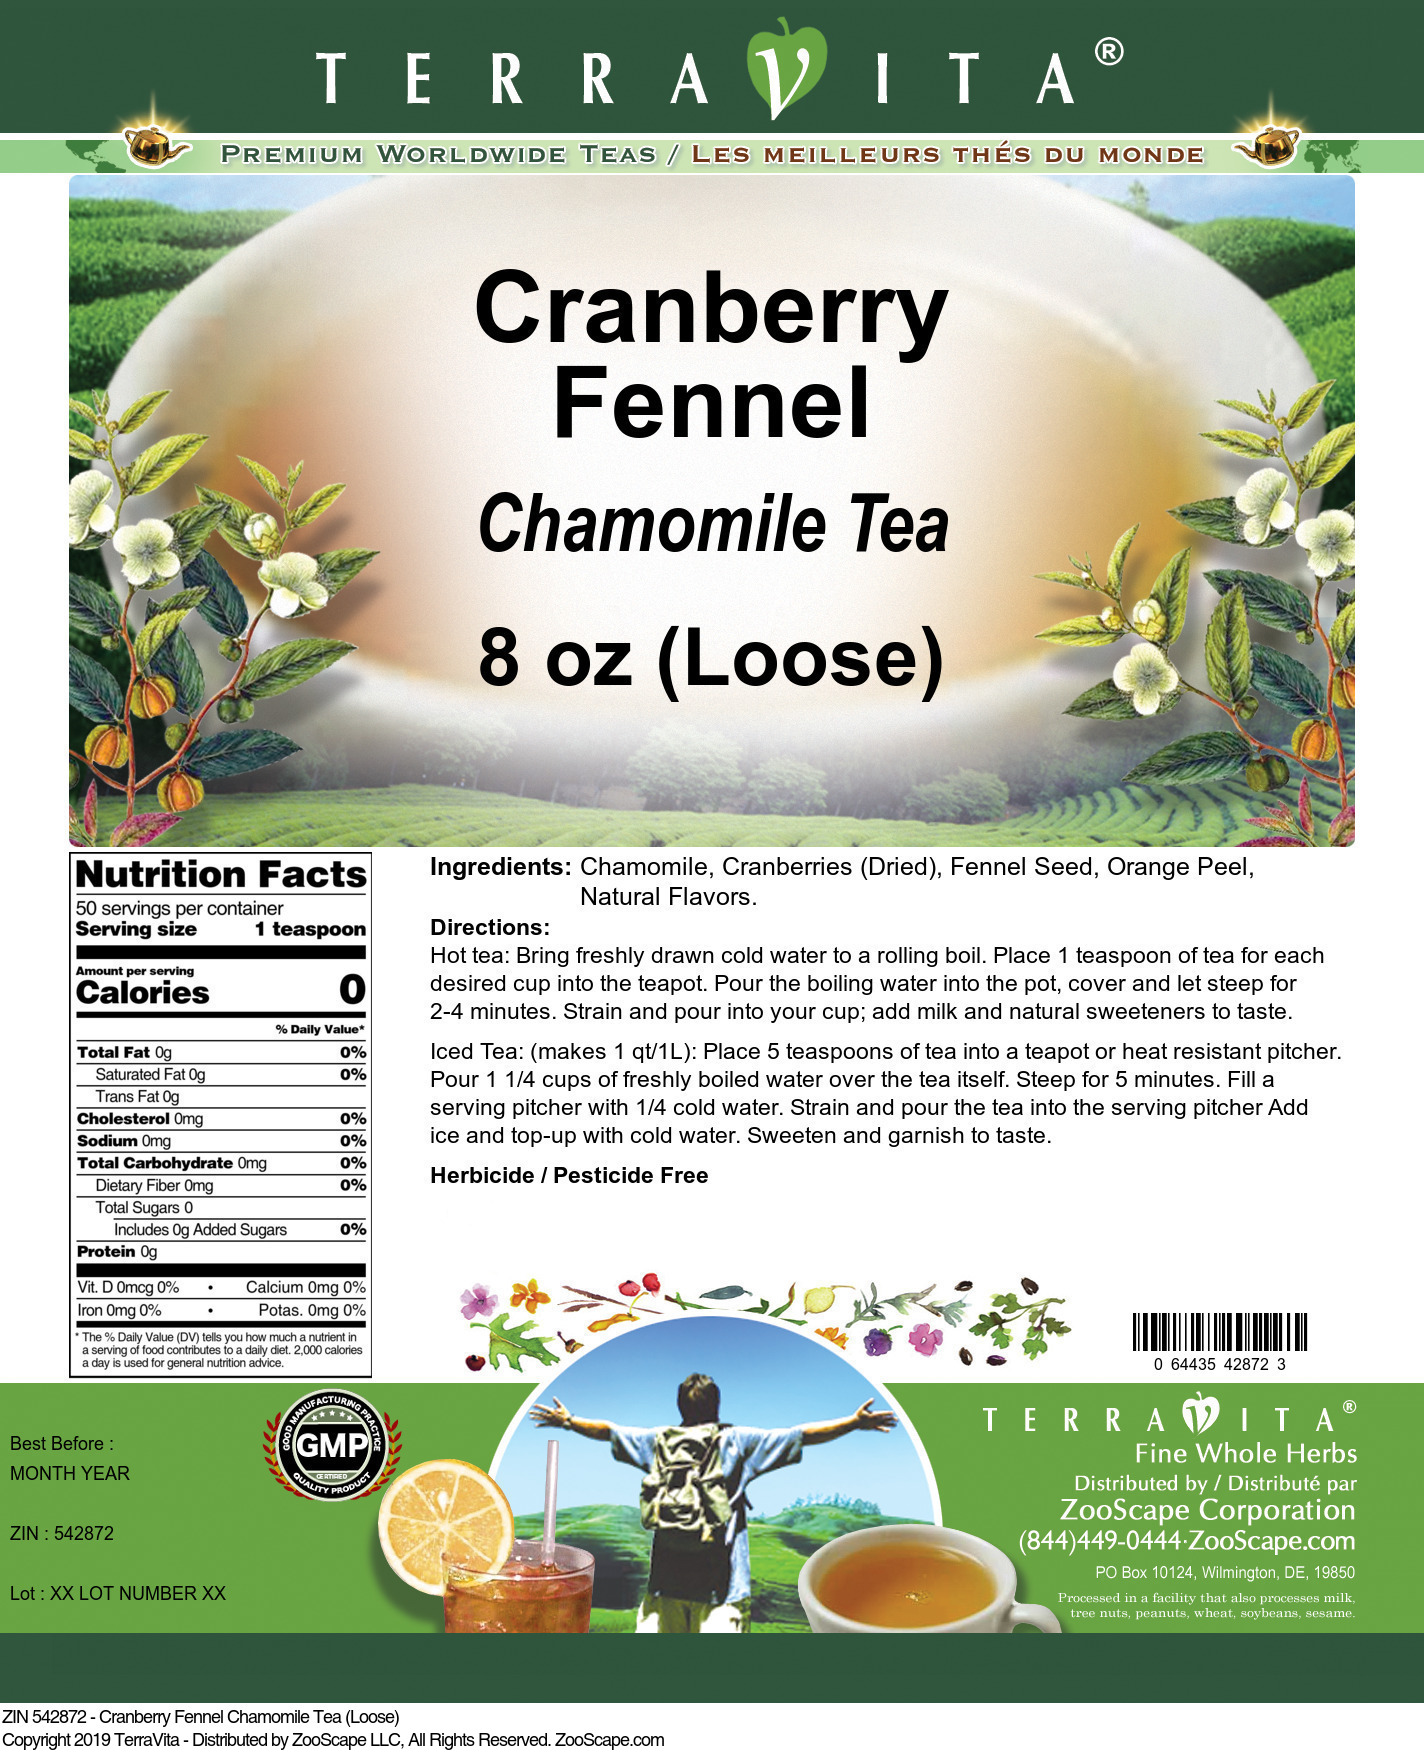 Cranberry Fennel Chamomile Tea (Loose) - Label